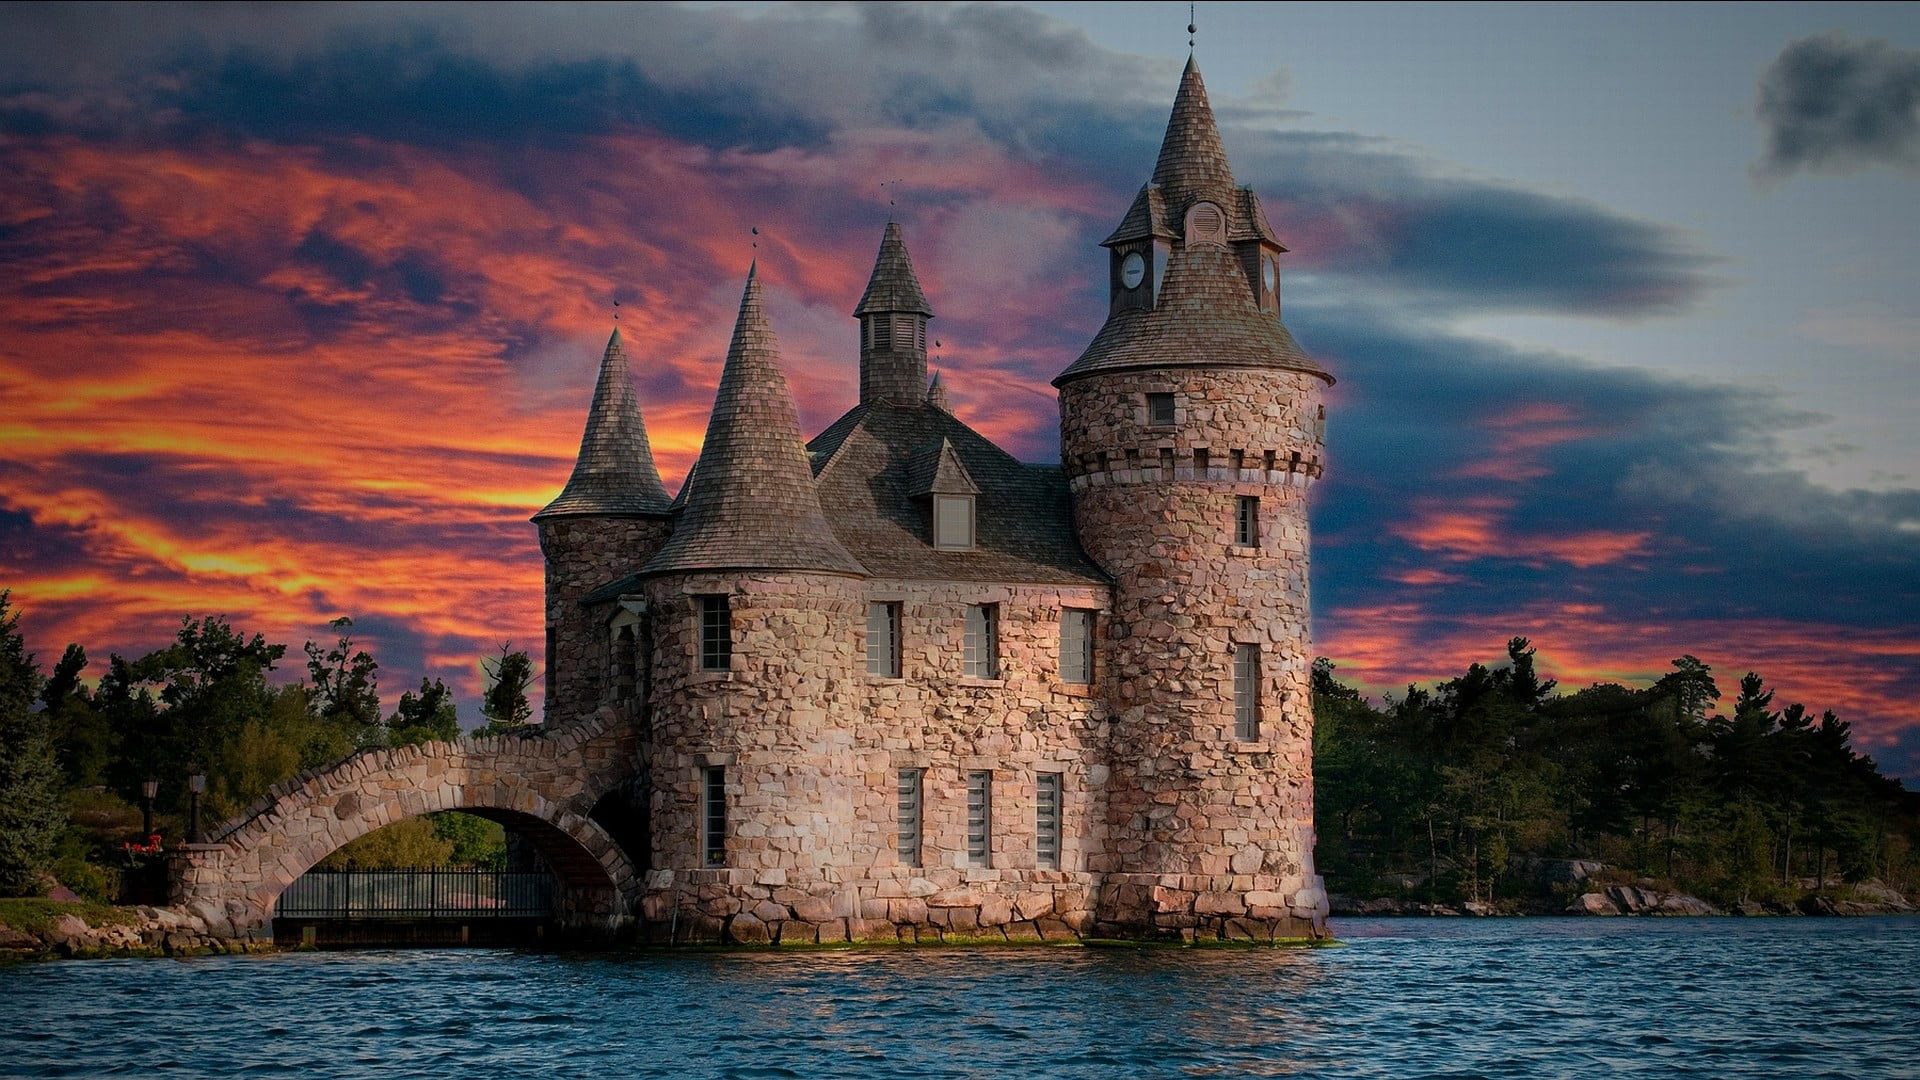 brown castle digital wallpaper, untitled, sunset, tower, water